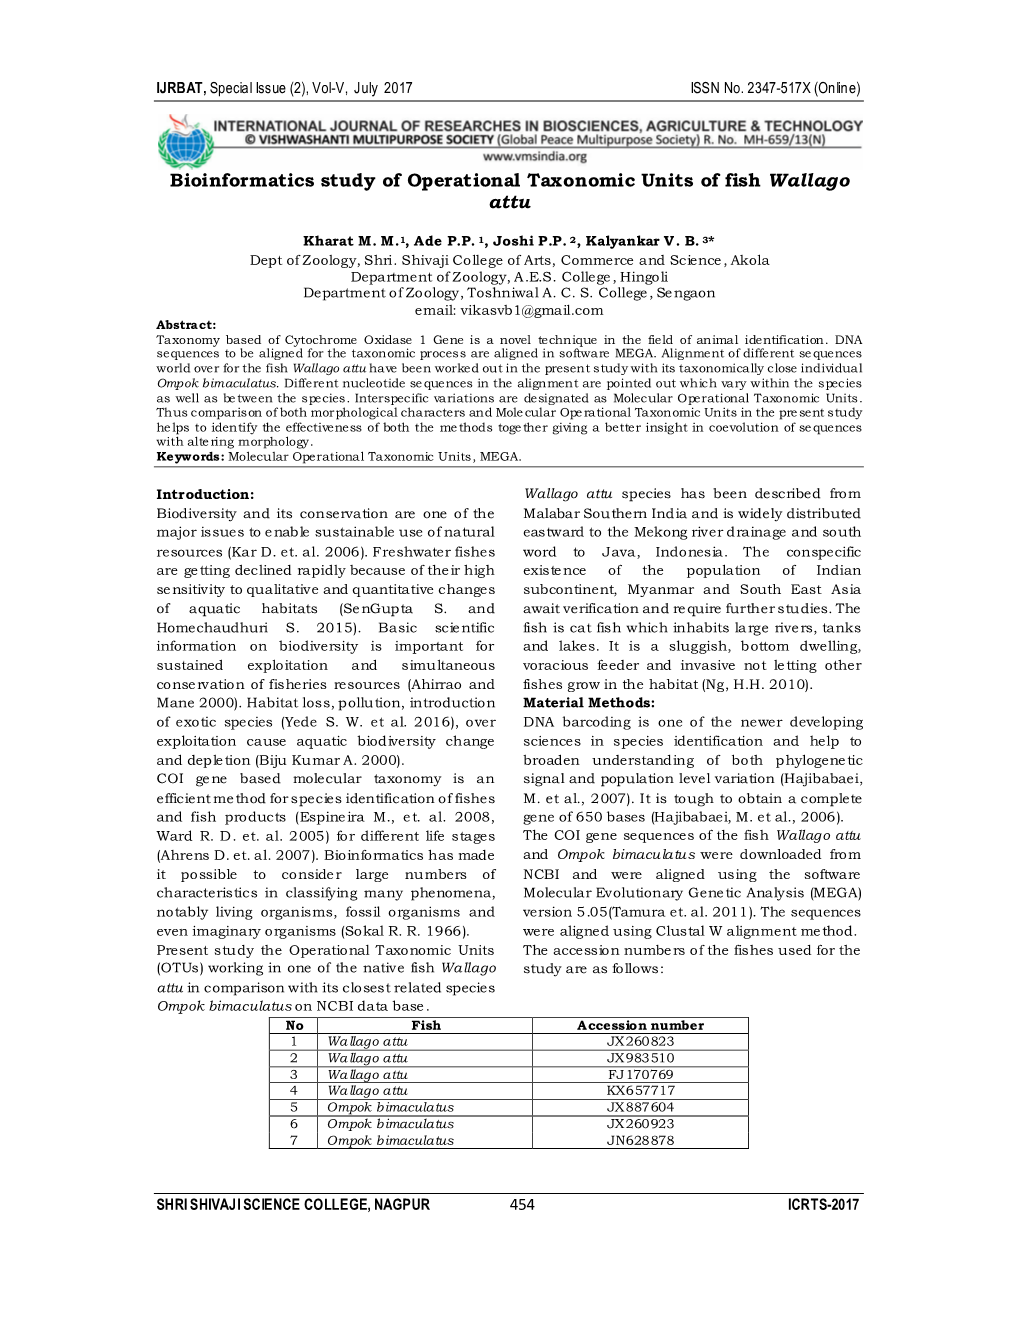 Bioinformatics Study of Operational Taxonomic Units of Fish Wallago Attu